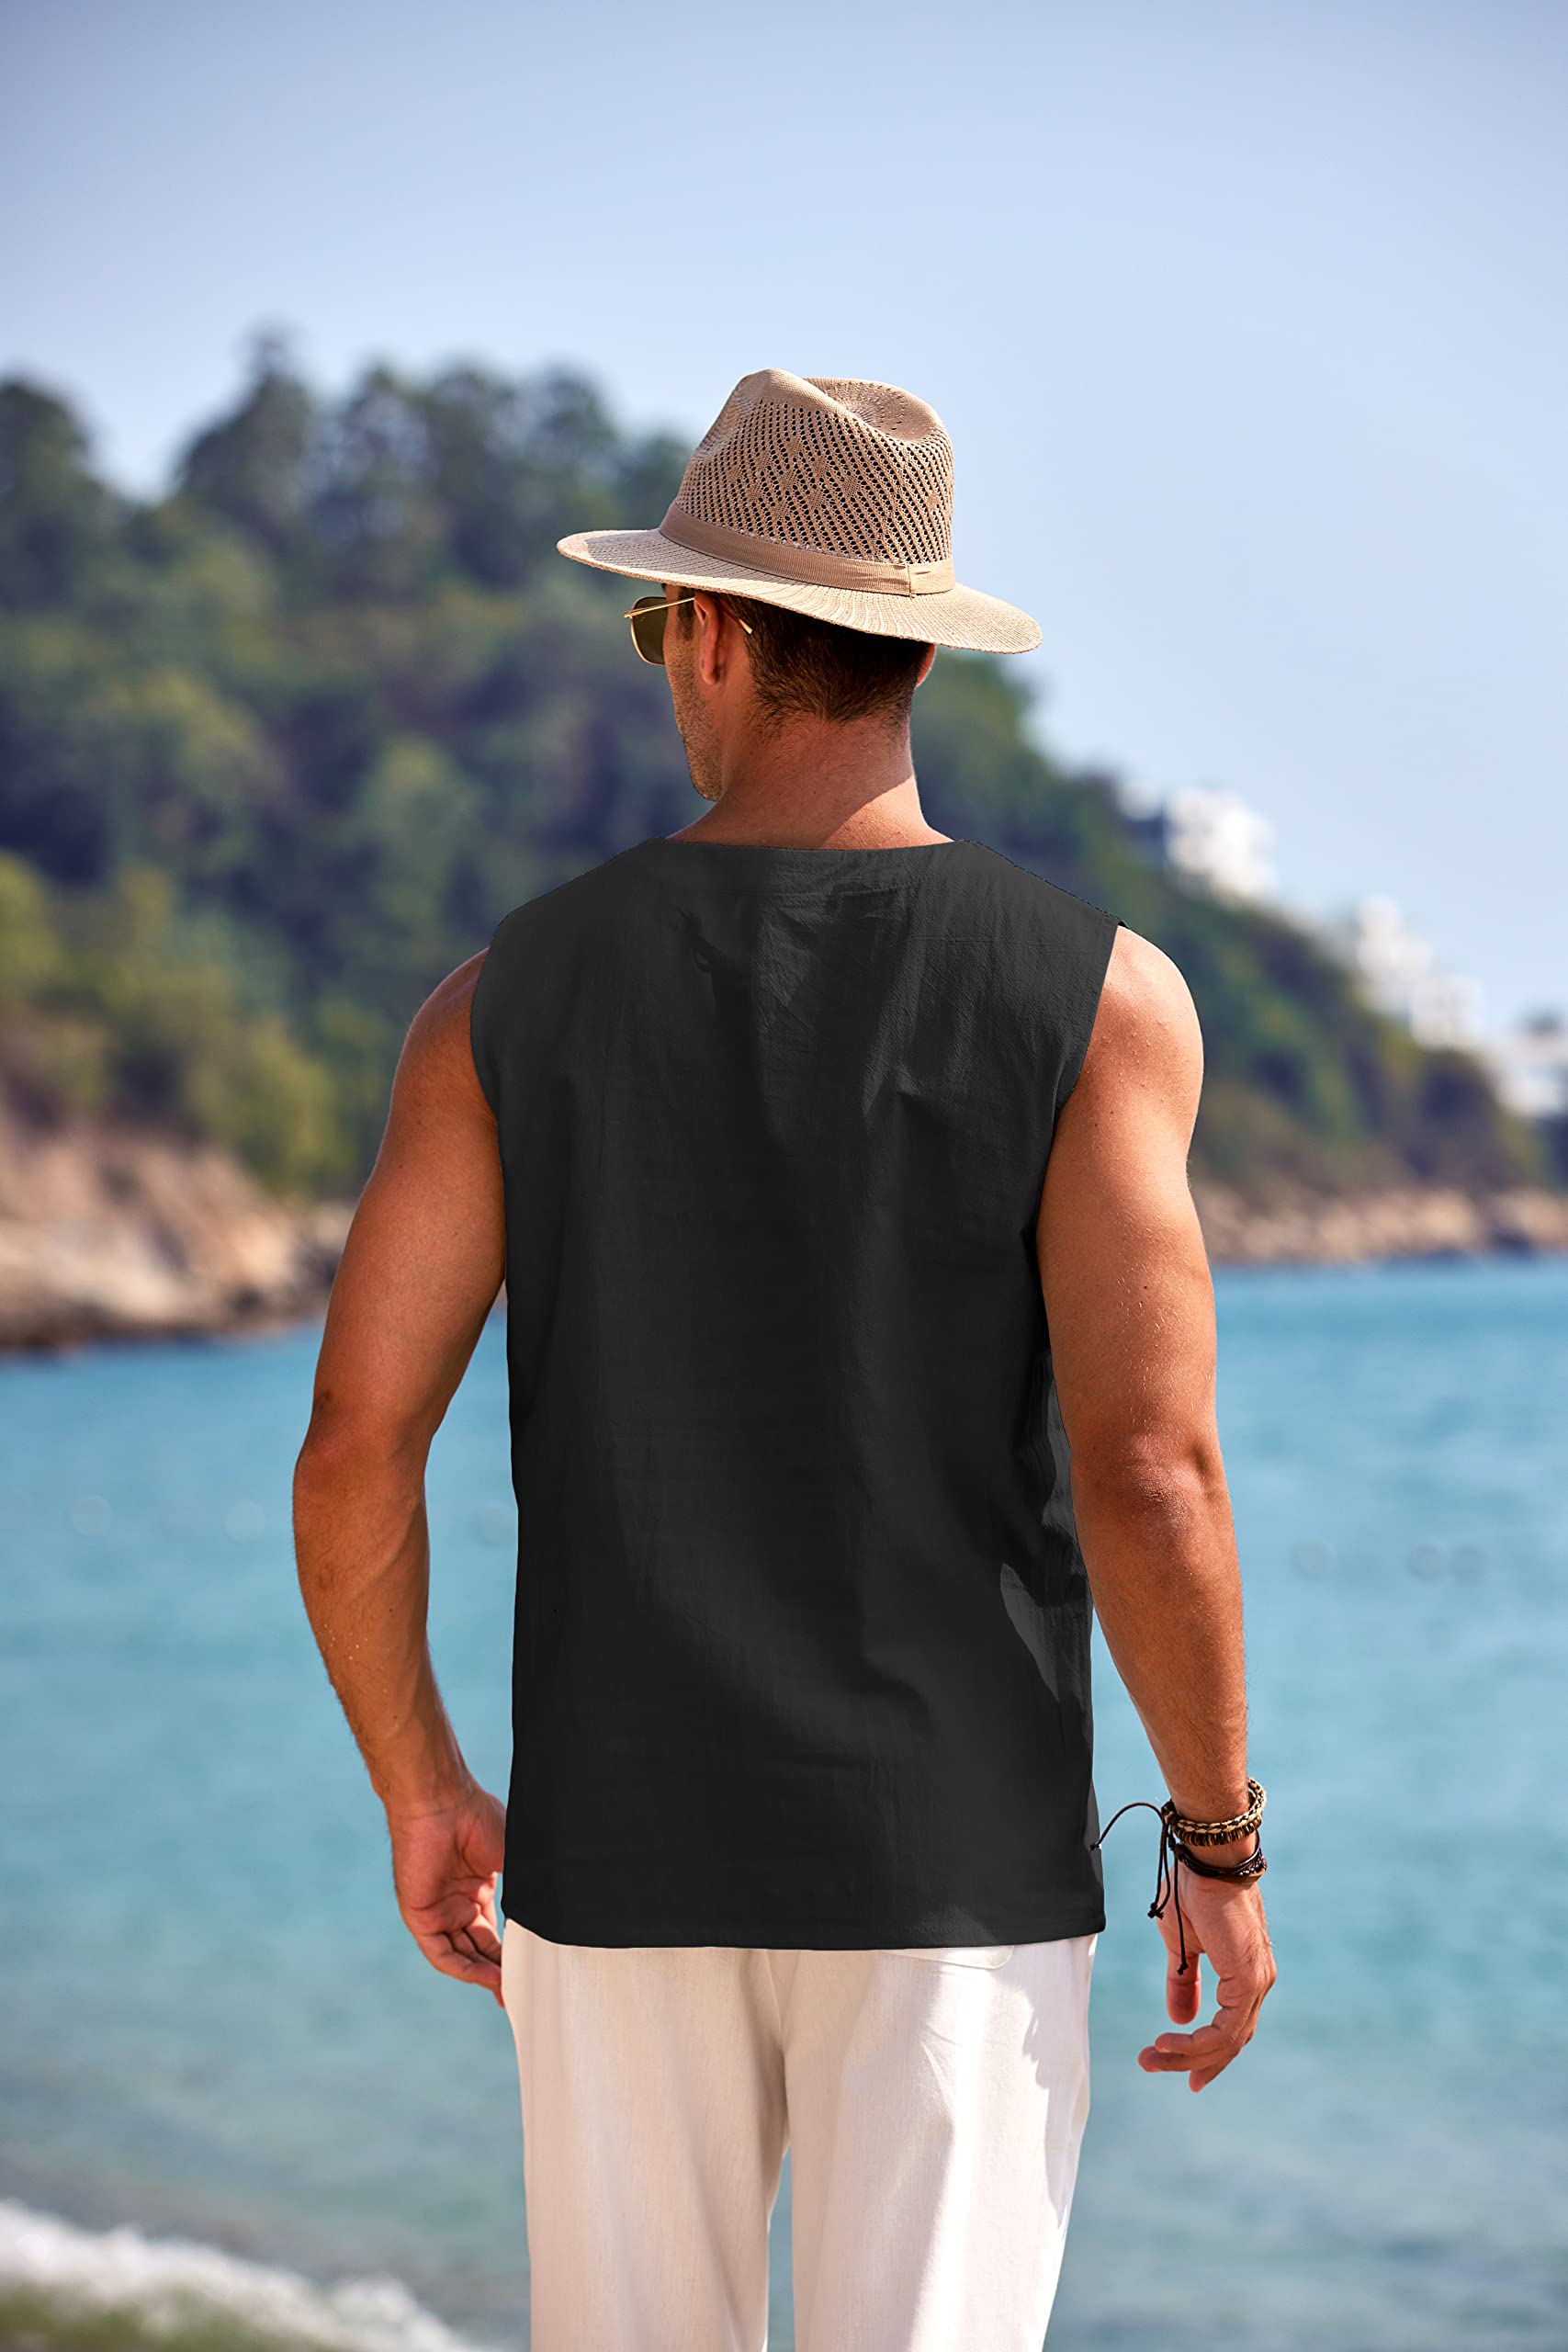 COOFANDY Men's Cotton Linen Tank Top Shirts Casual Sleeveless Lace Up Beach Hippie Tops Bohemian Renaissance Pirate Tunic